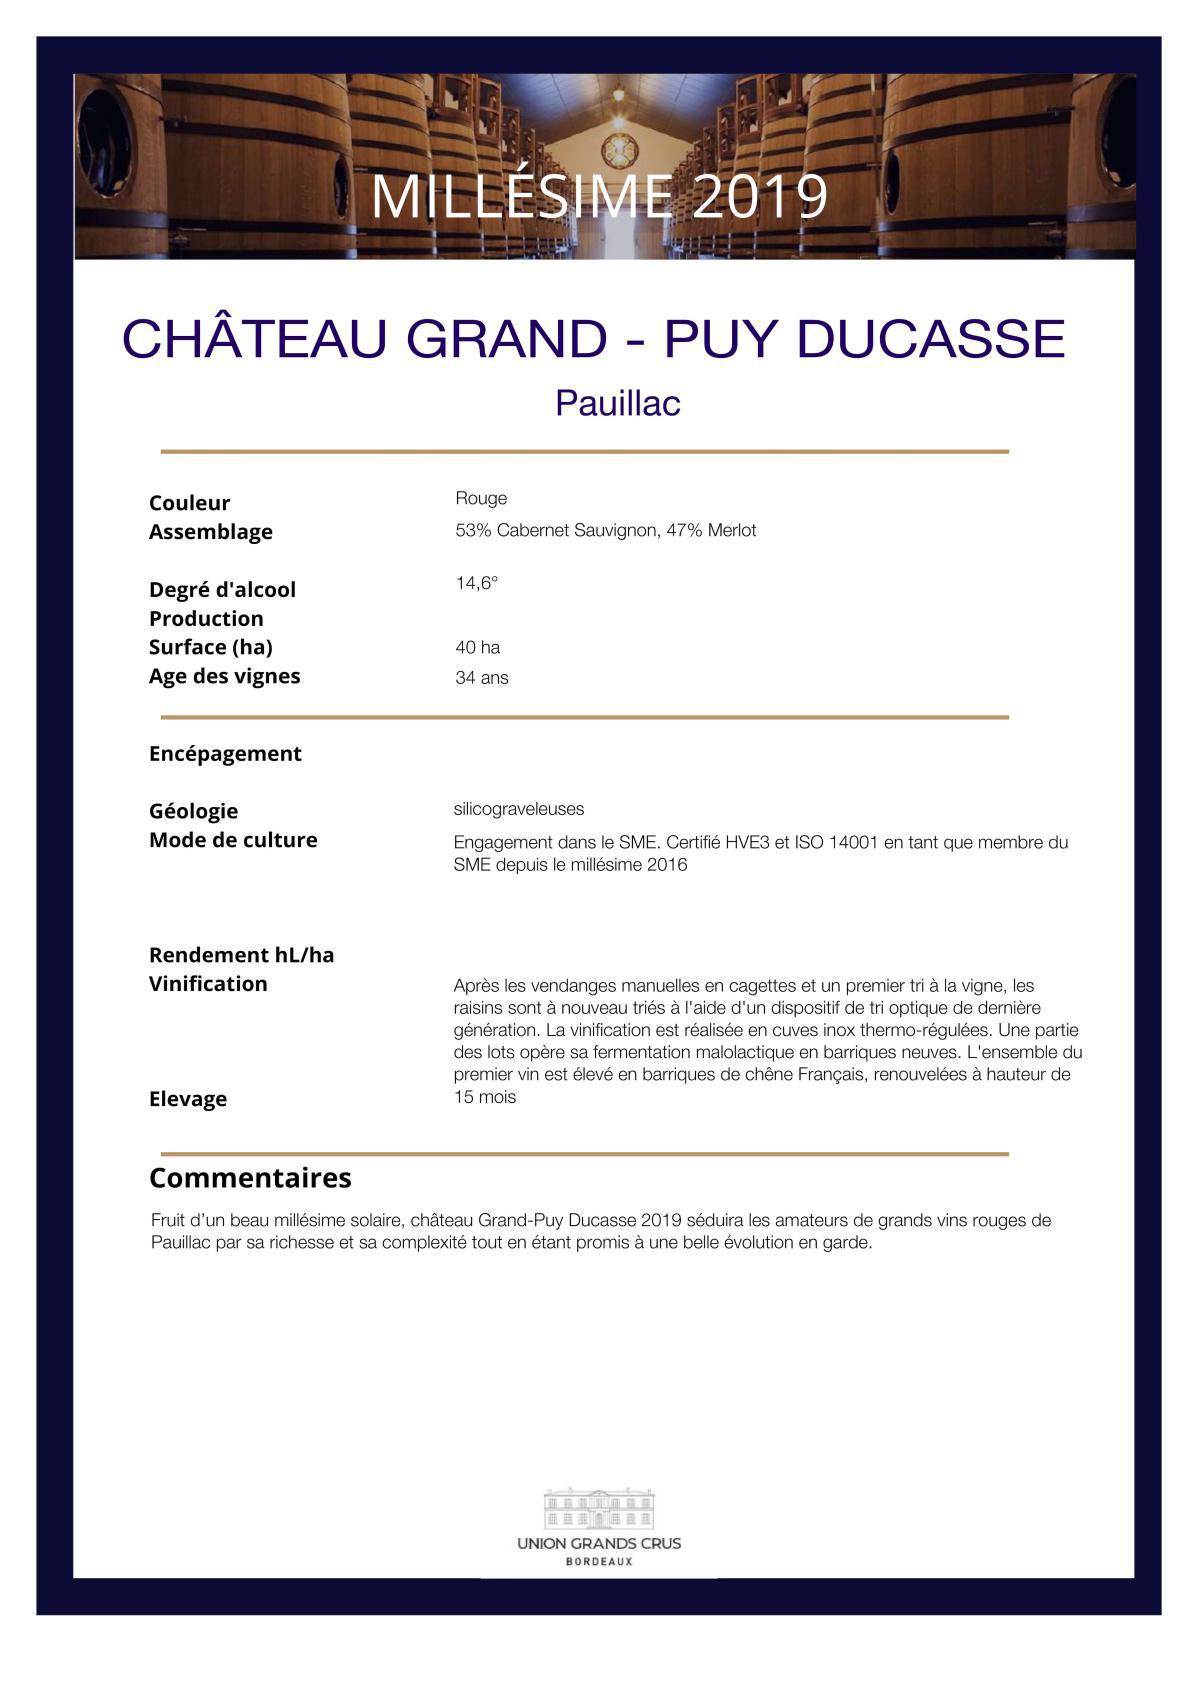 Château Grand - Puy Ducasse